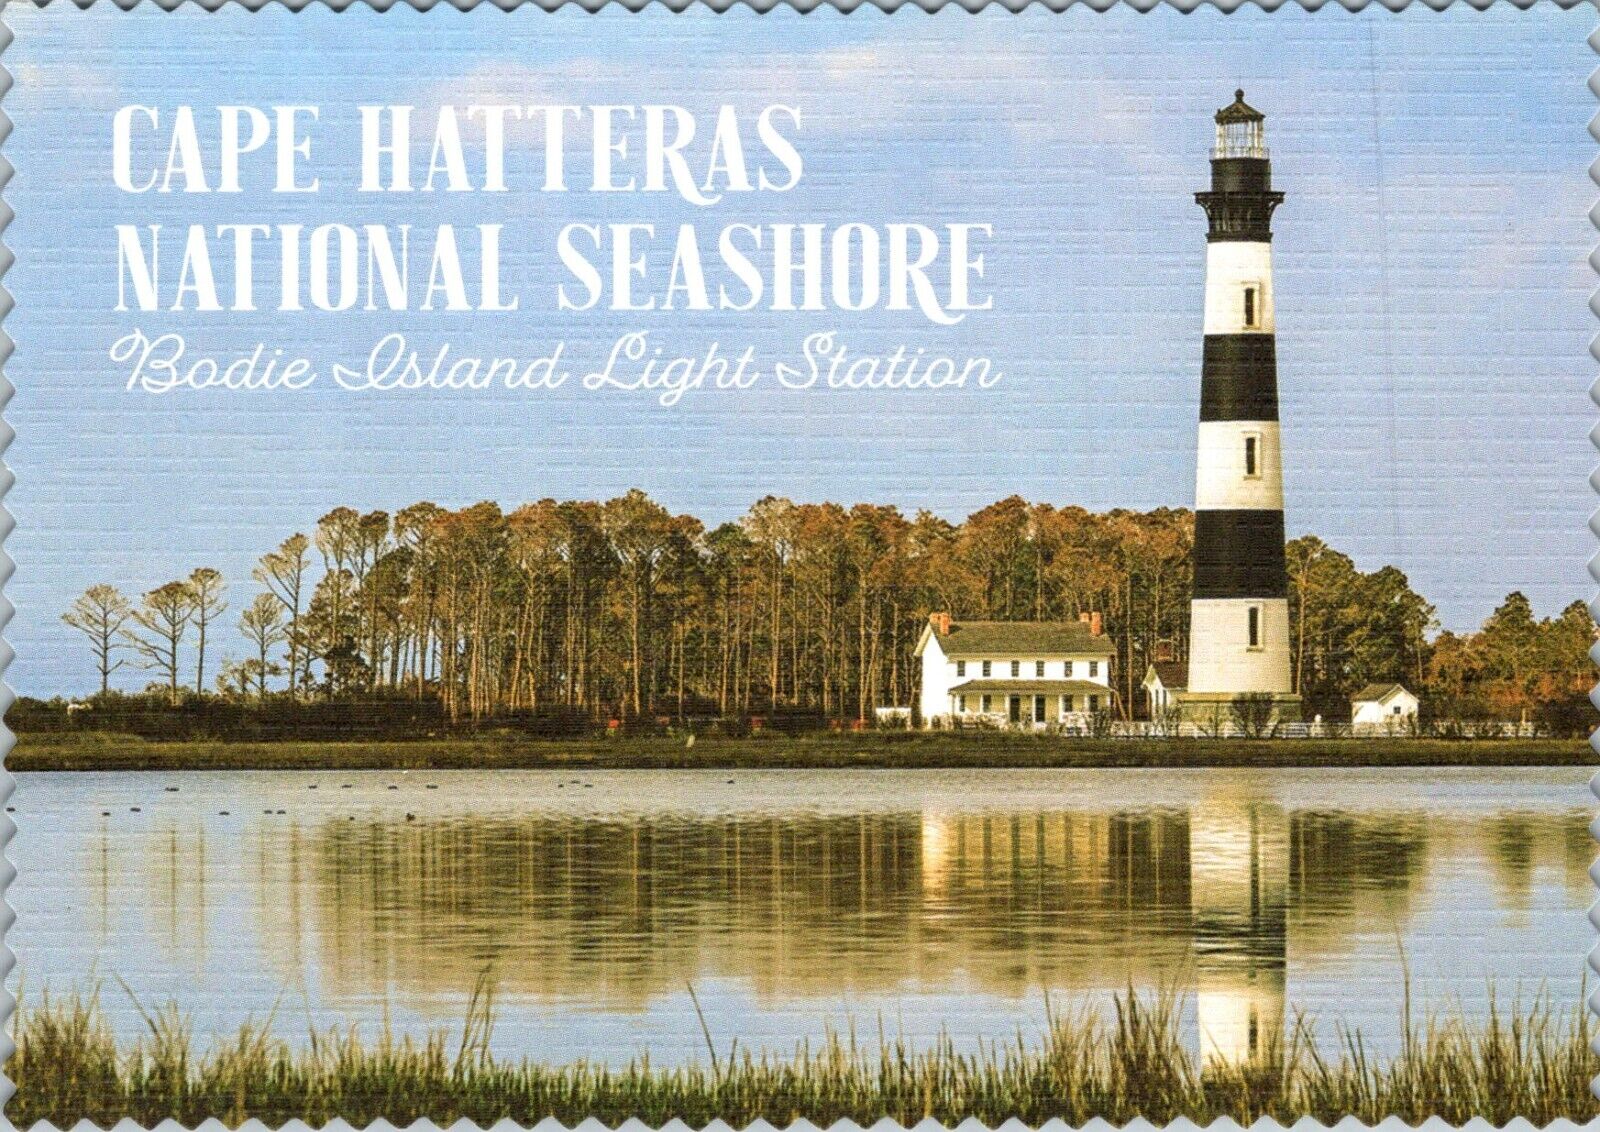 Cape Hatteras National Seashore Bodie Island Lighthouse Station postcard